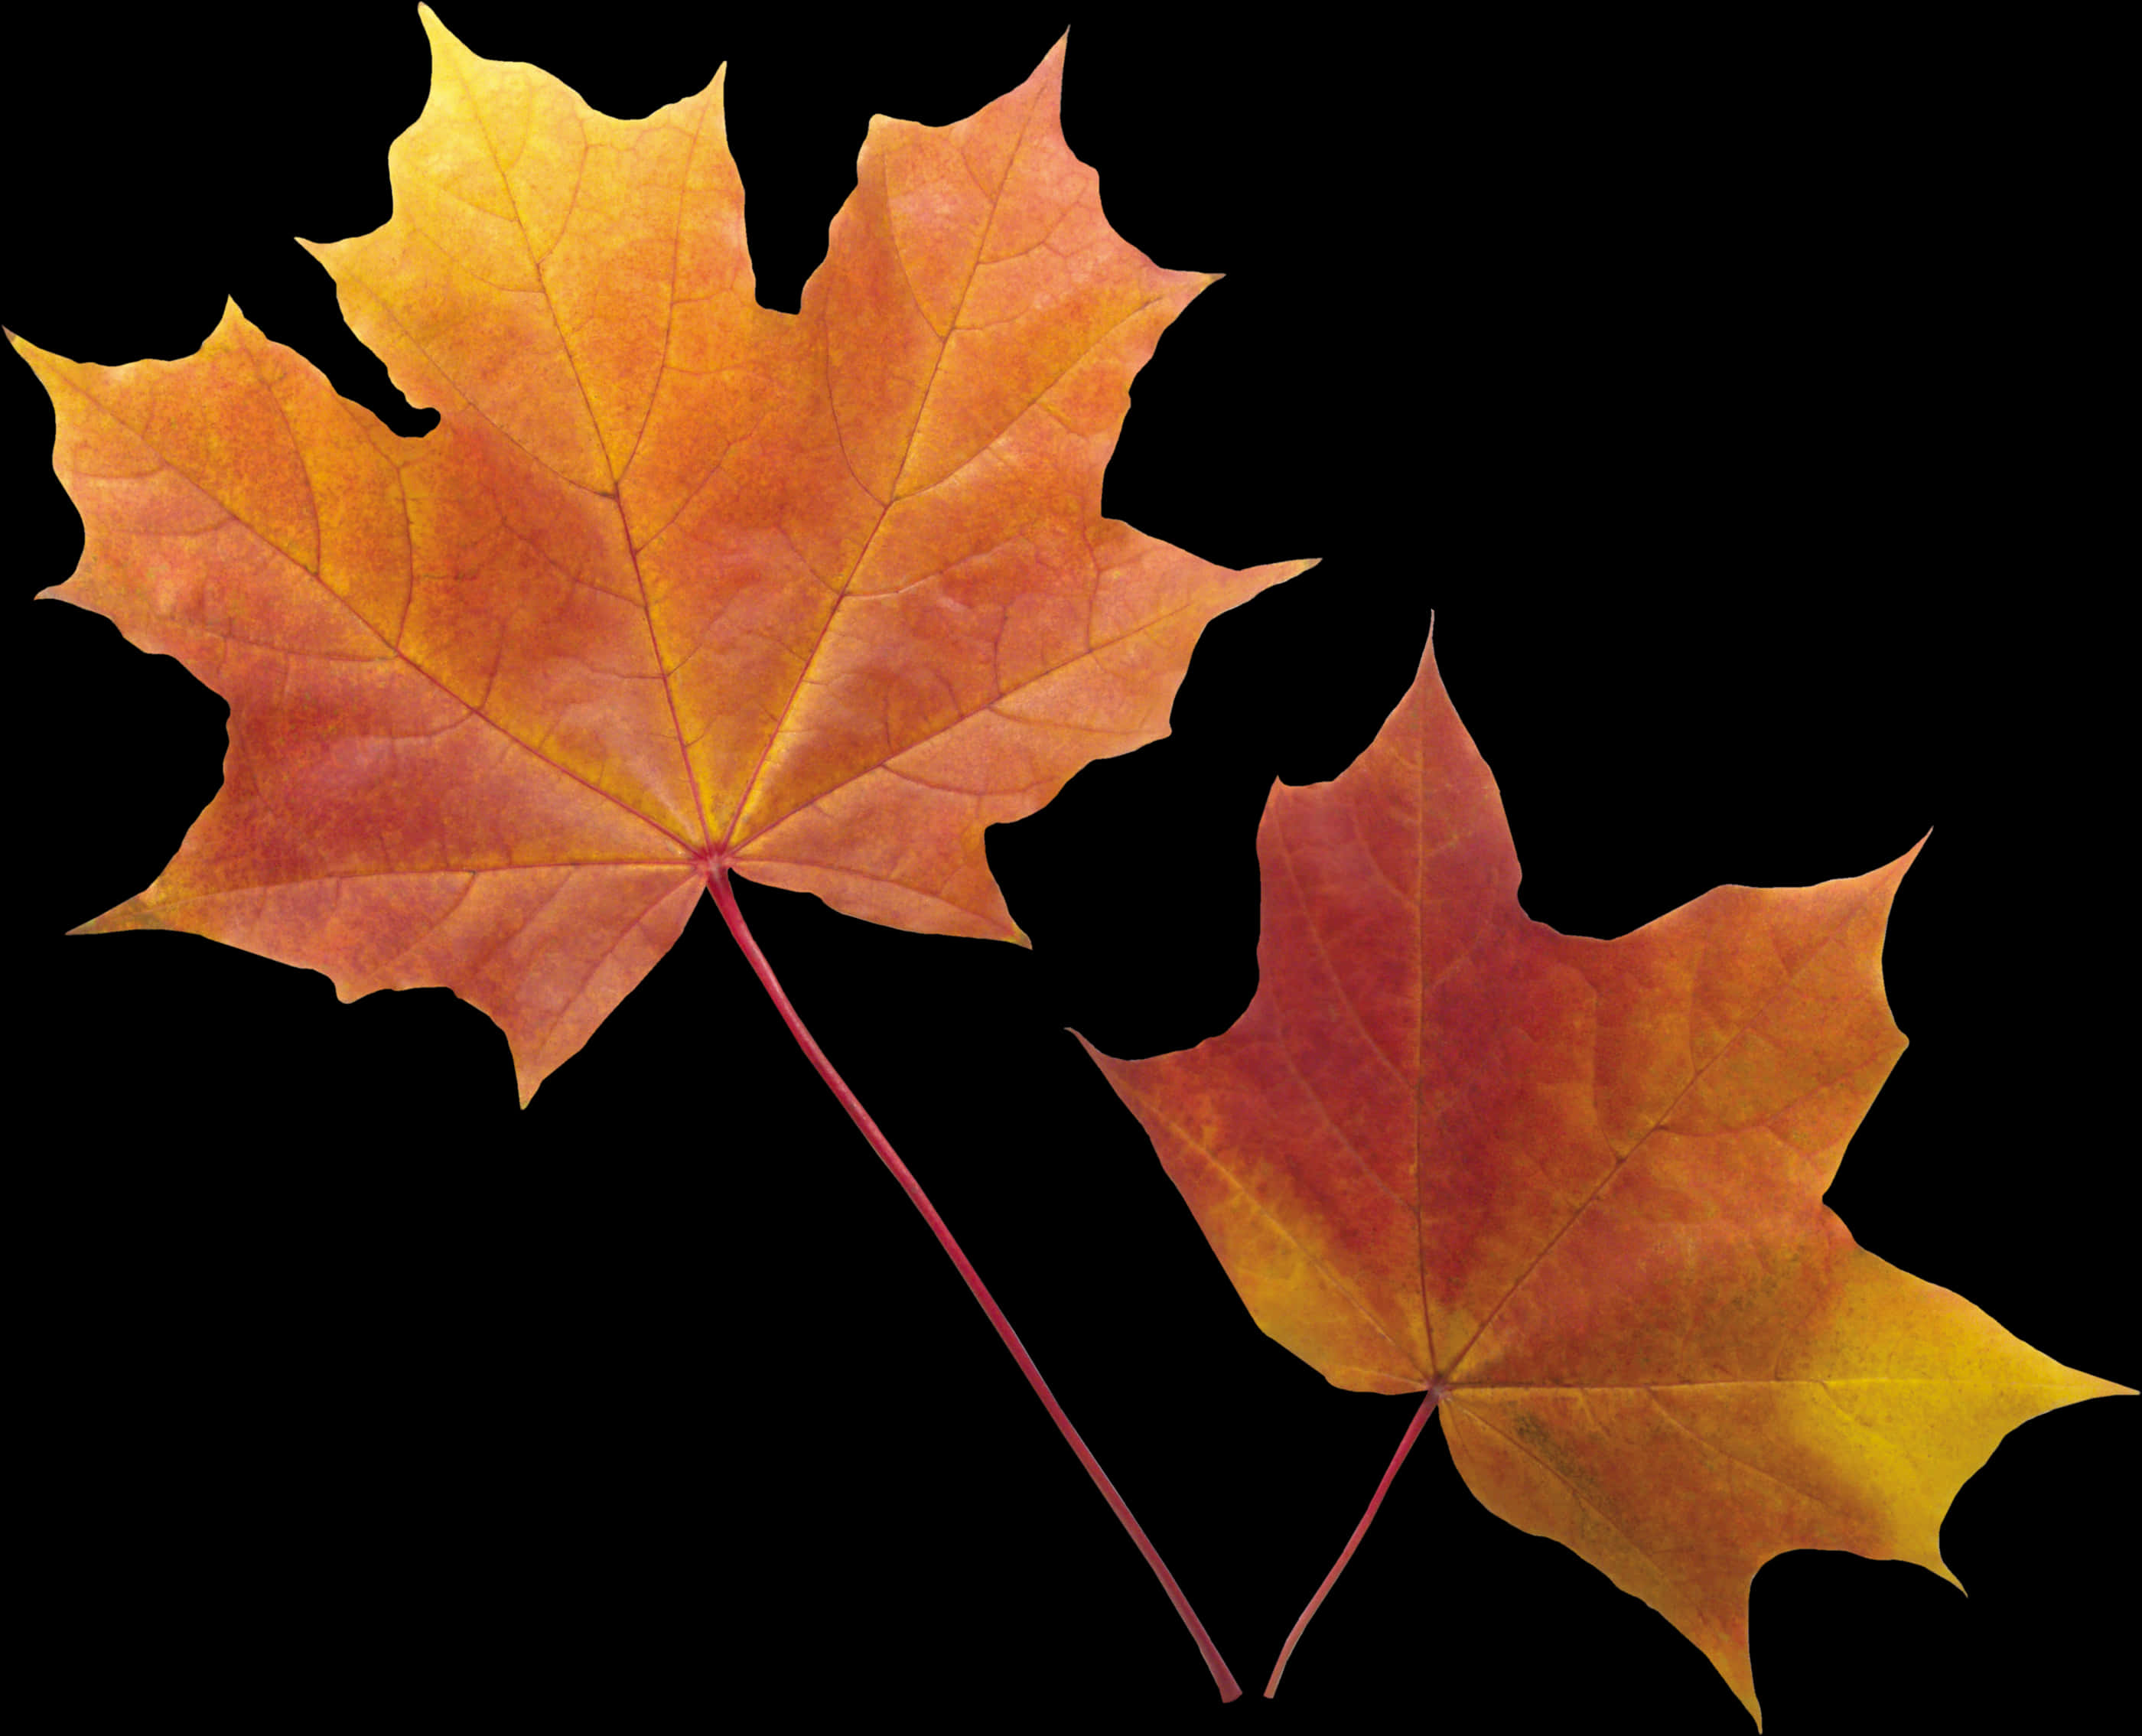 Autumn_ Leaves_ Against_ Black_ Background.jpg PNG image